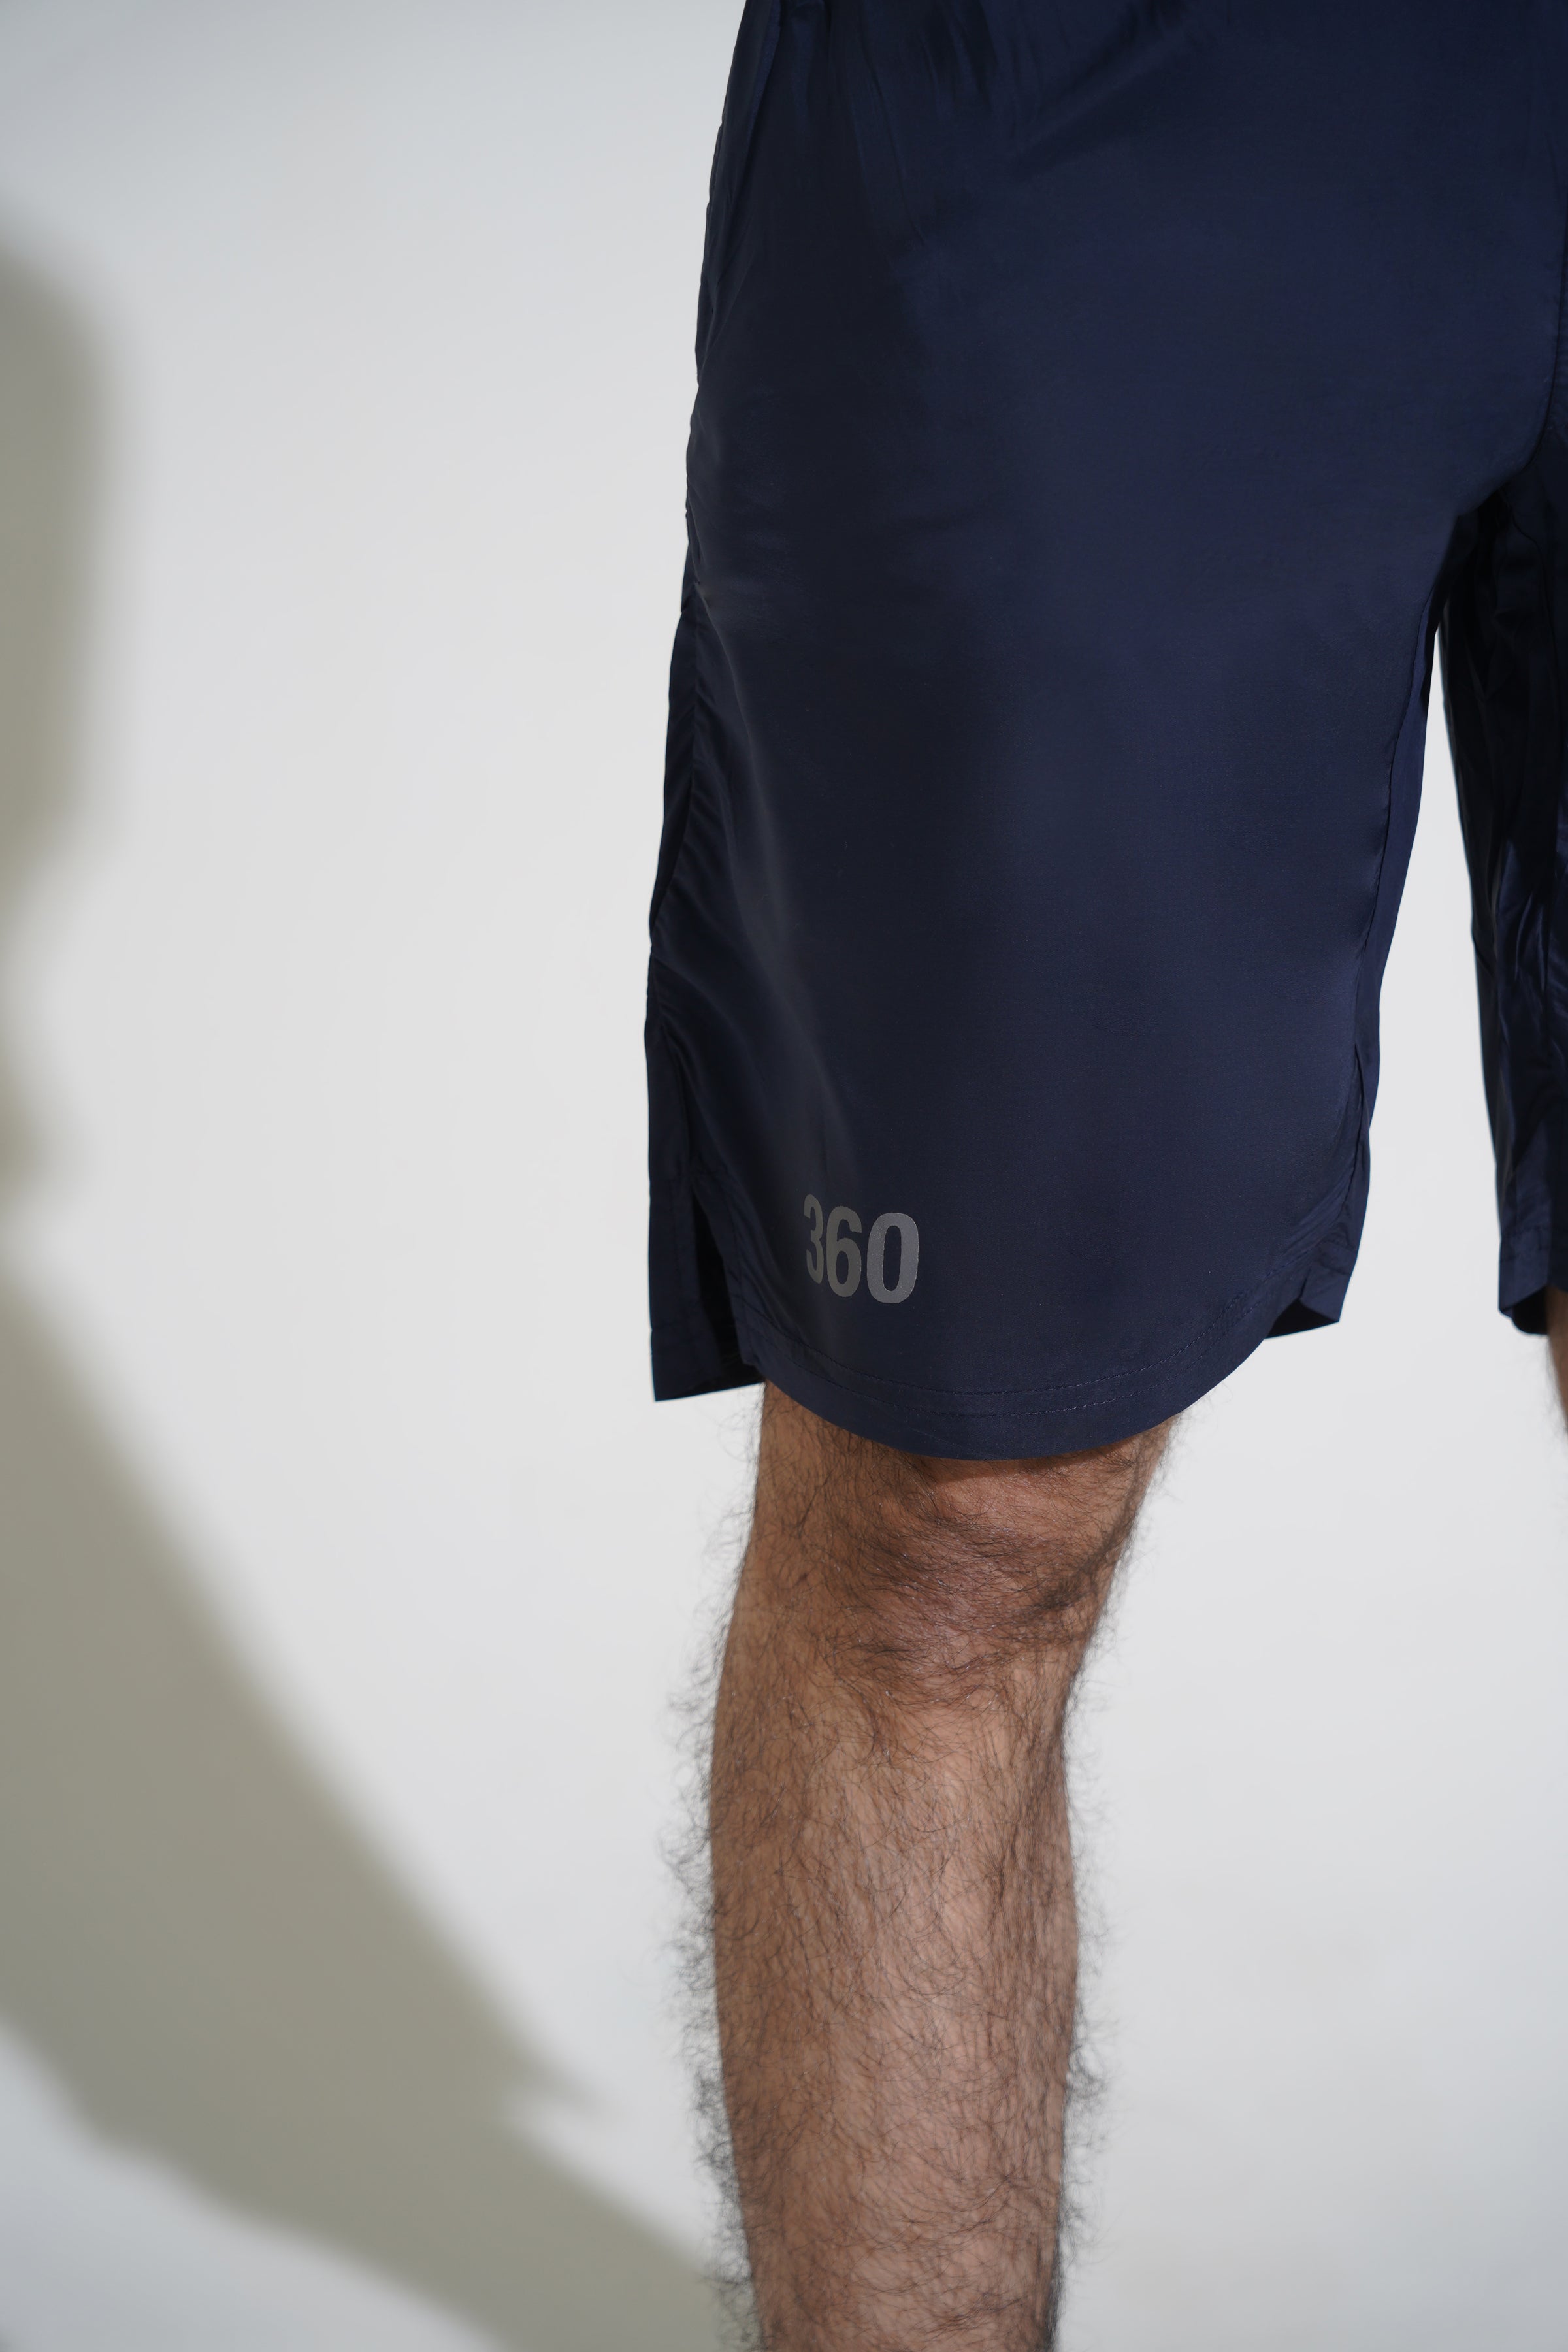 360 Navy Shorts